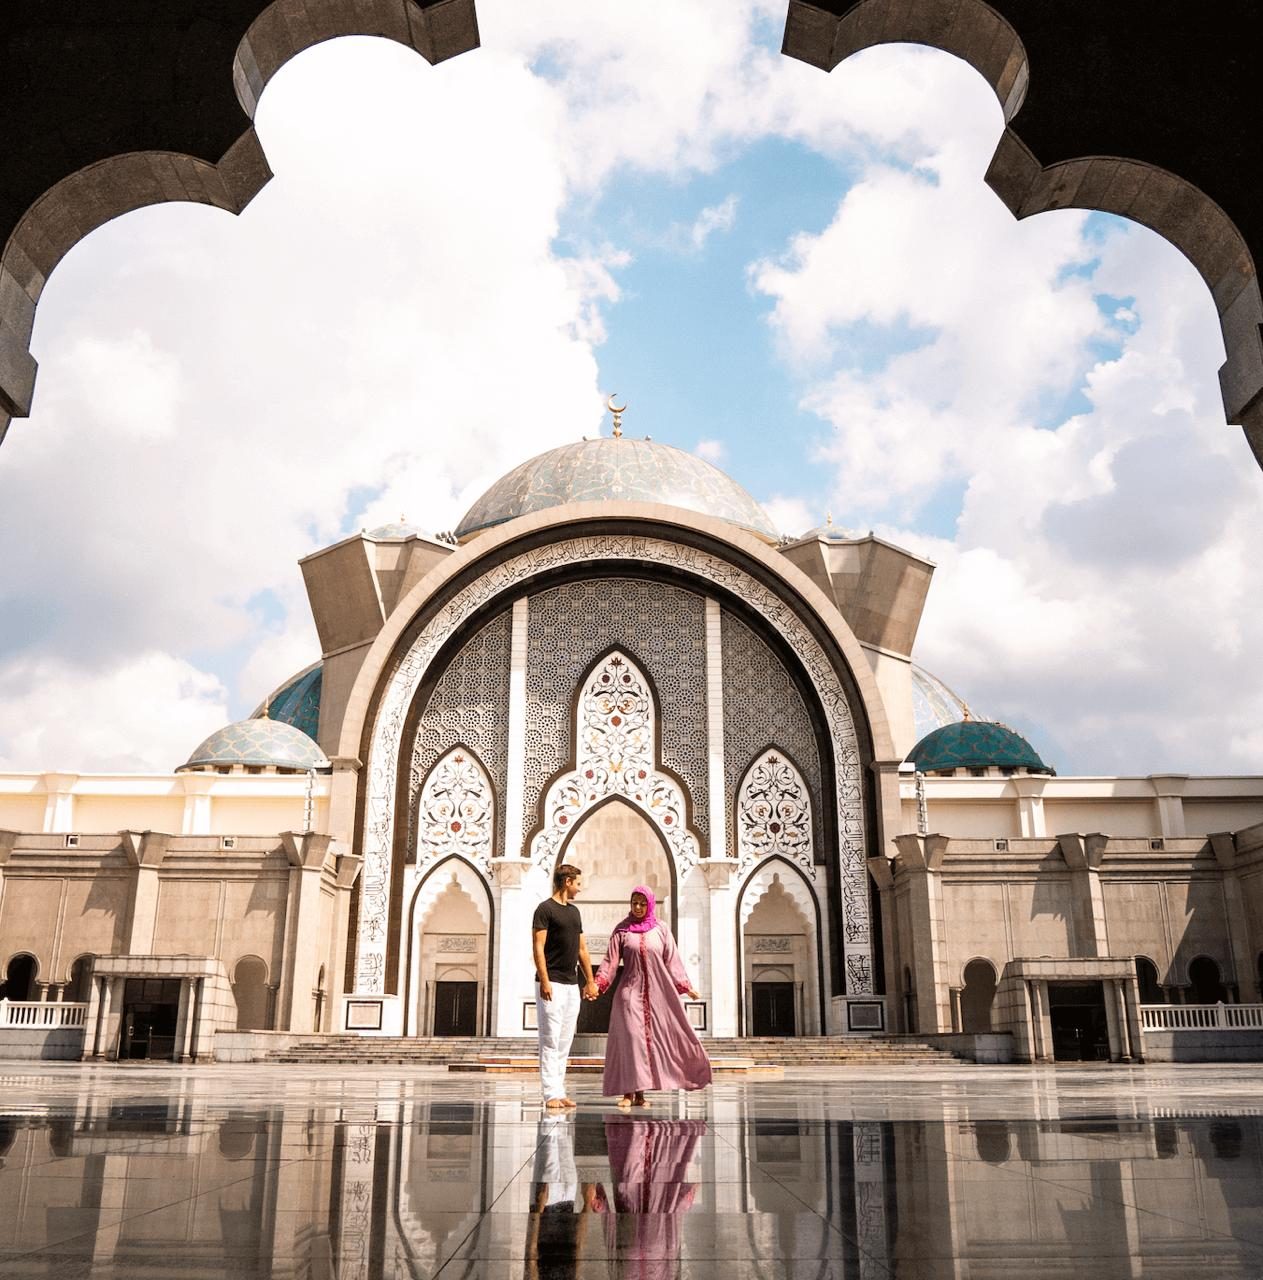 Masjid Wilayah Persekutuan The Federal Territory Mosque Kuala Lumpur